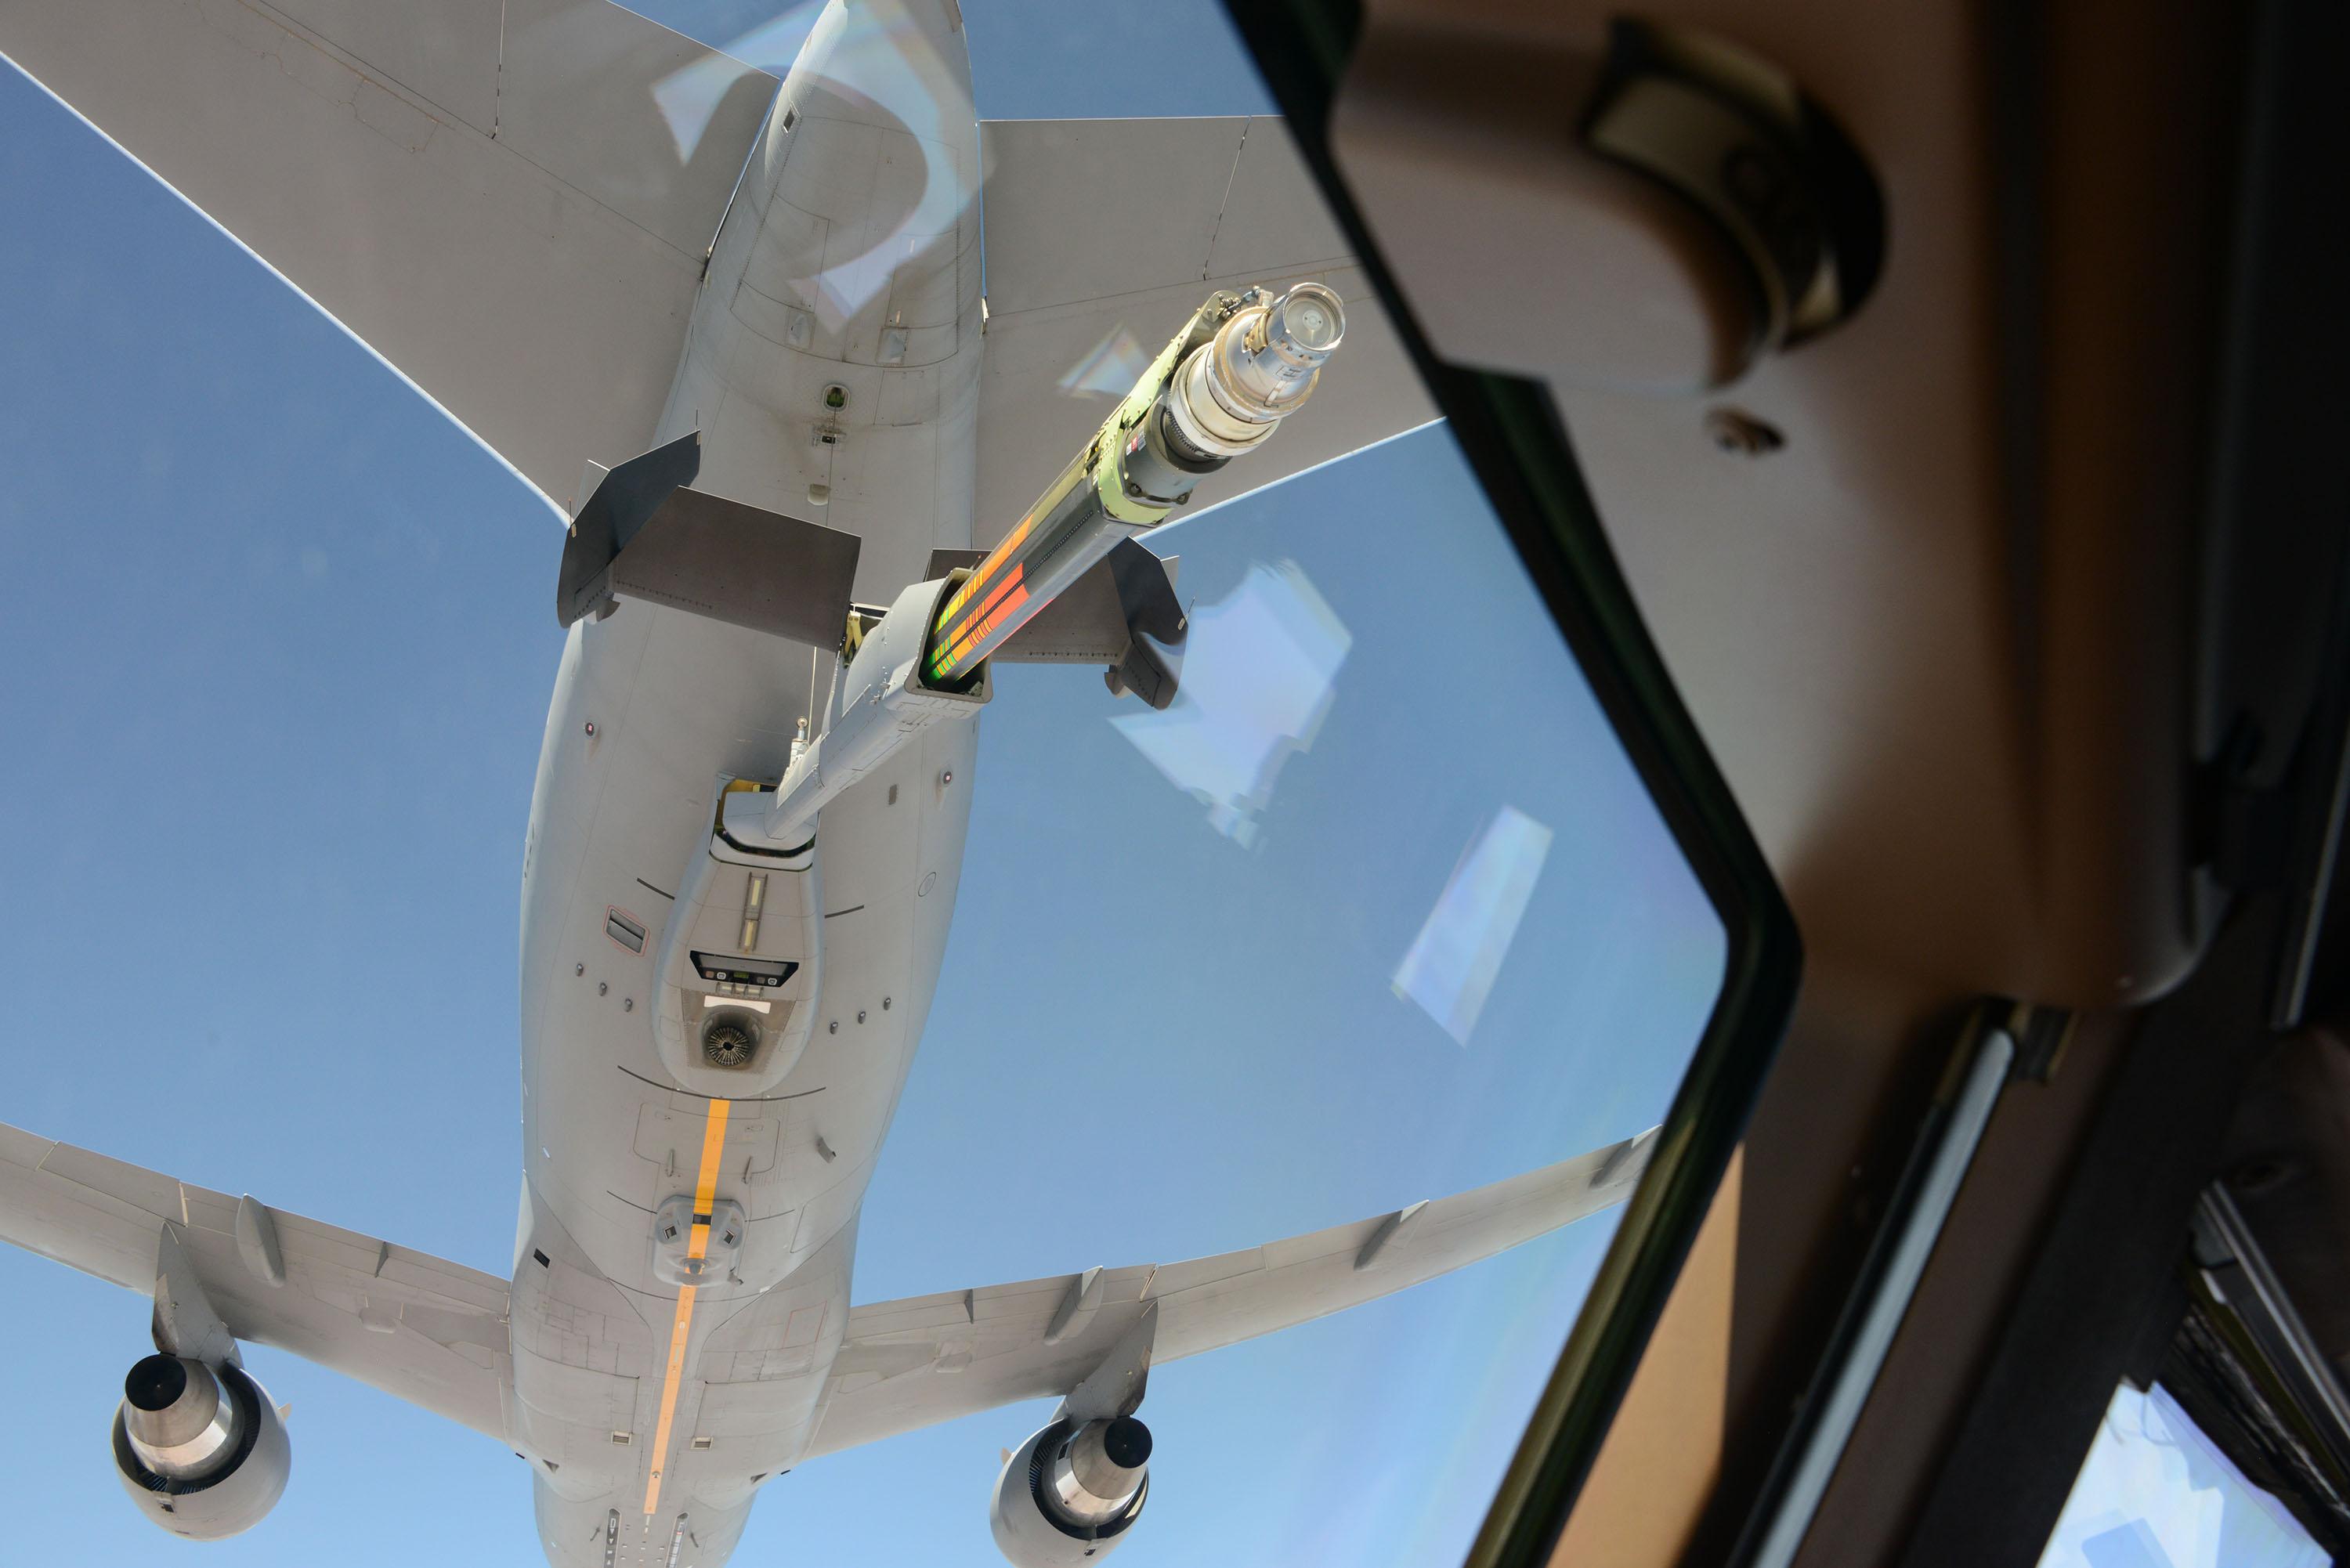 KC-46 Pegasus prepares to refuel